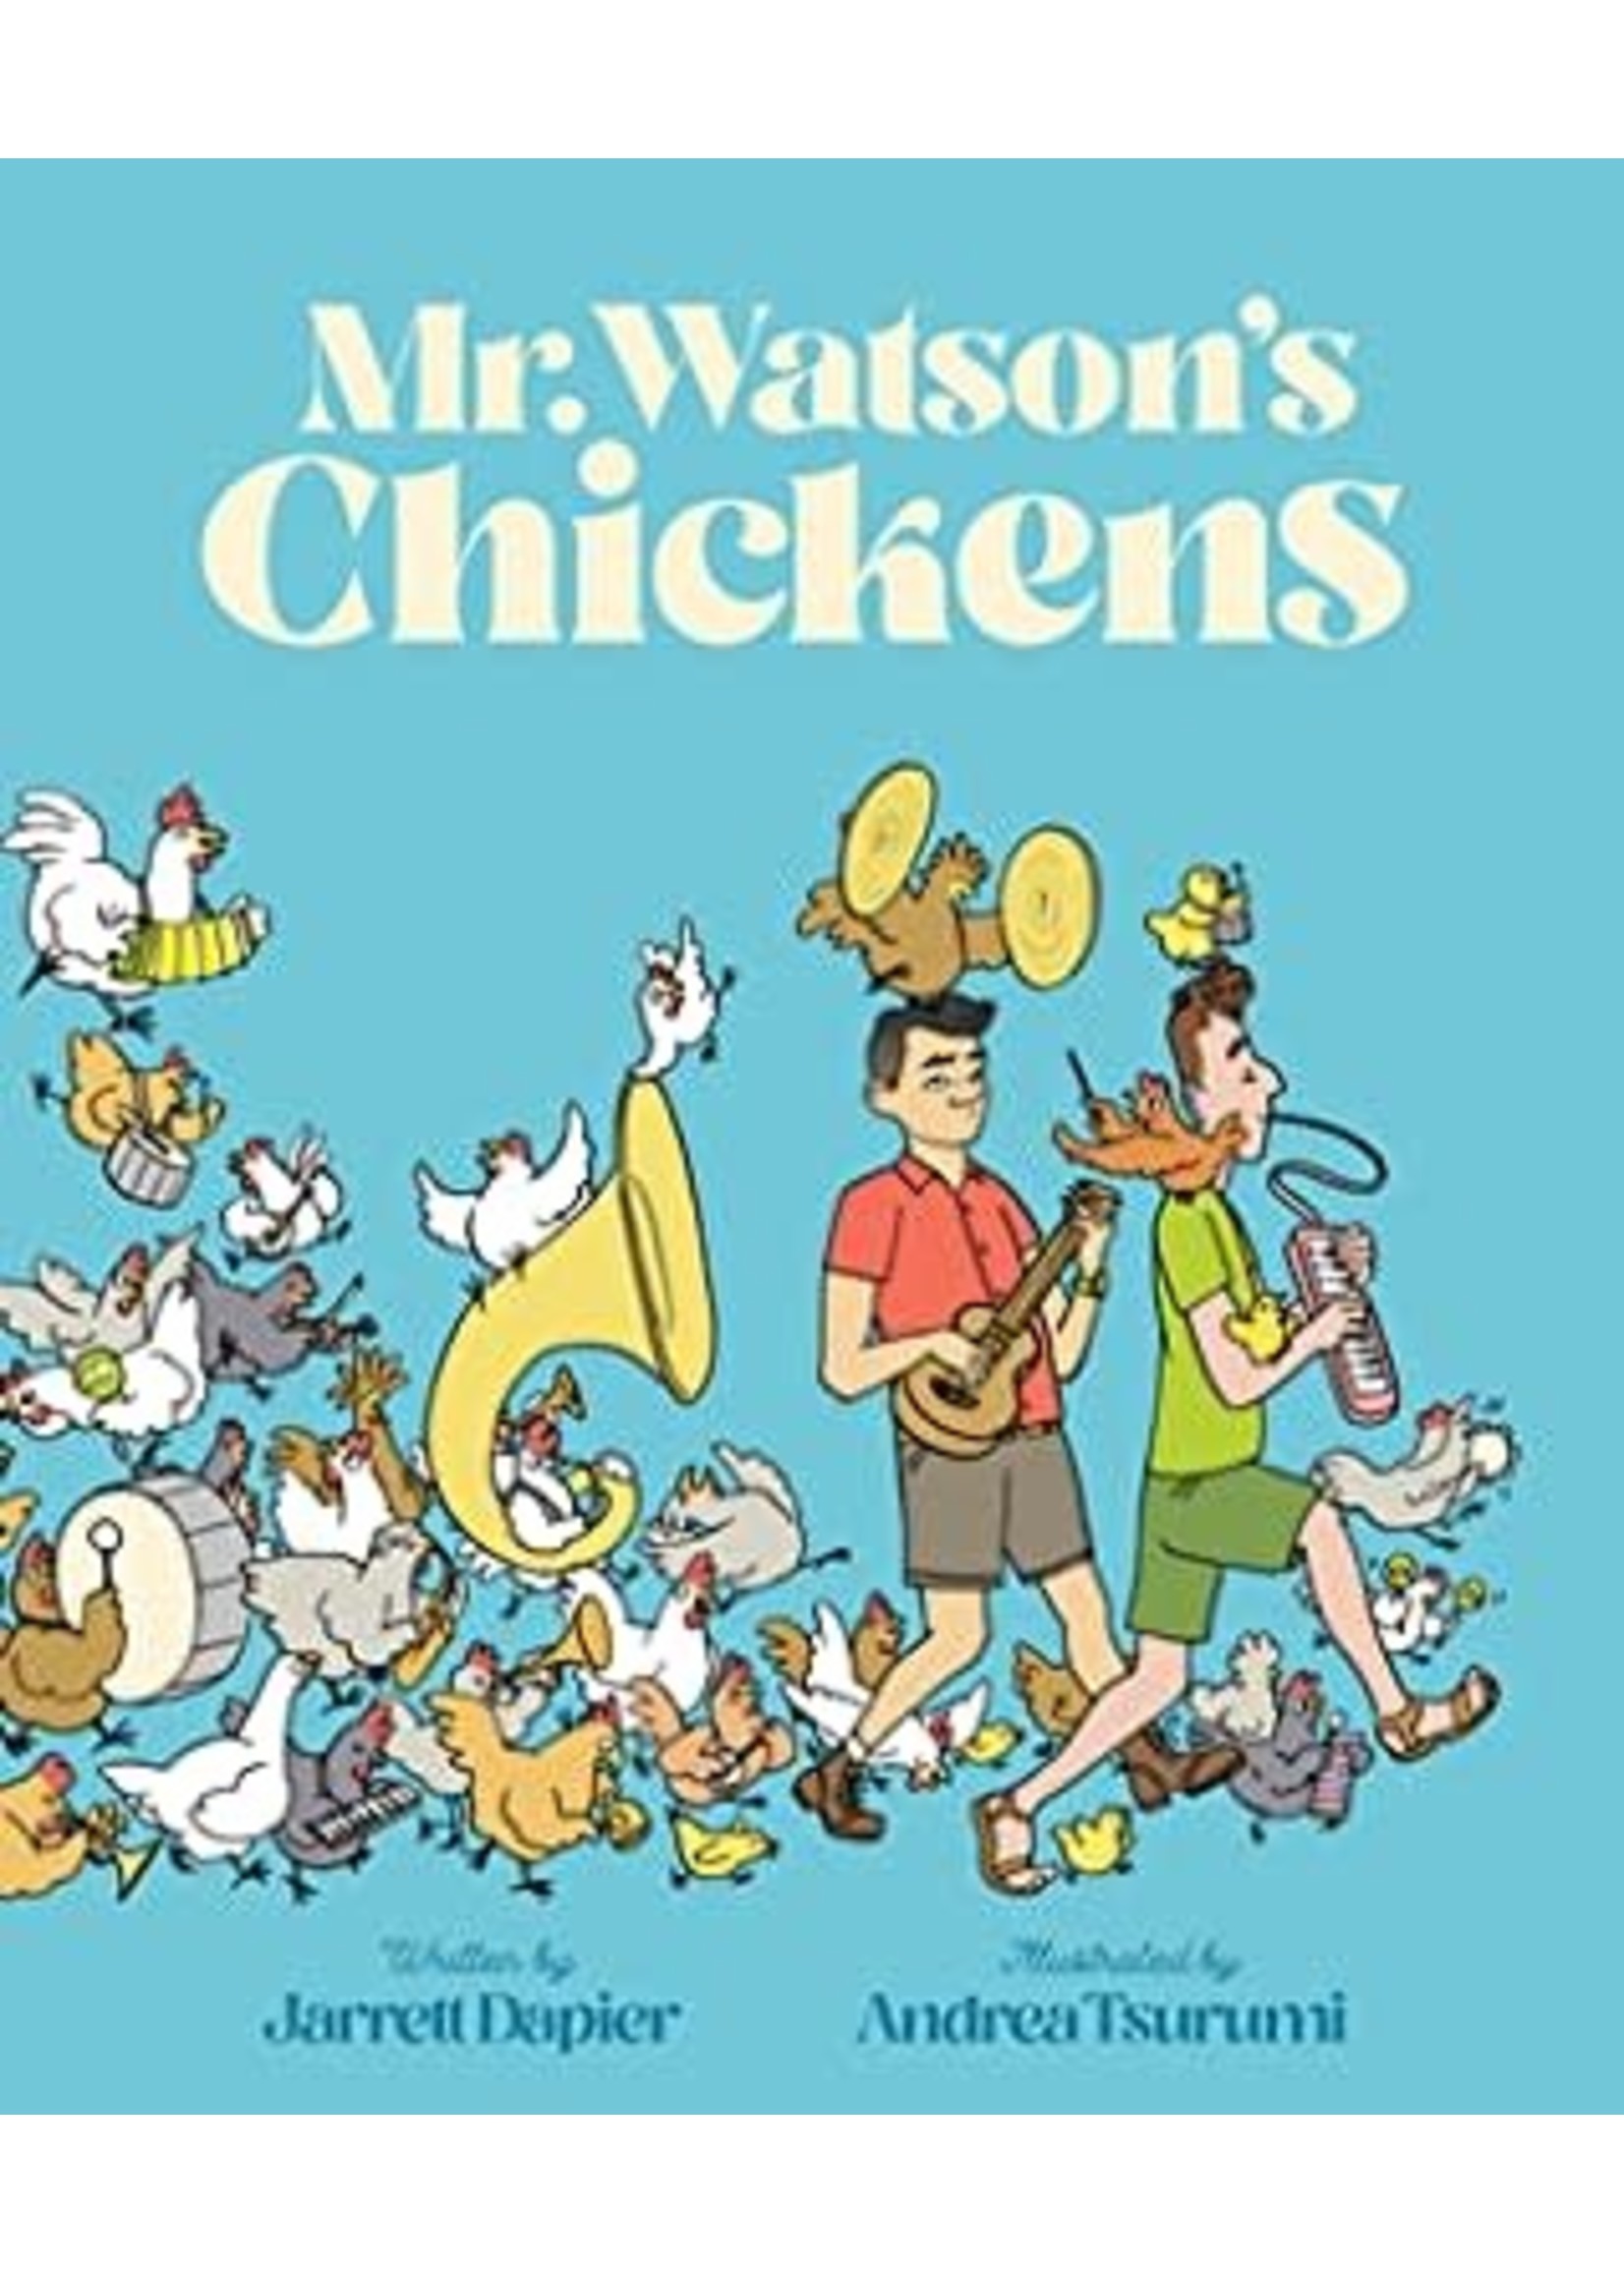 Mr. Watson's Chickens by Jarrett Dapier, Andrea Tsurumi